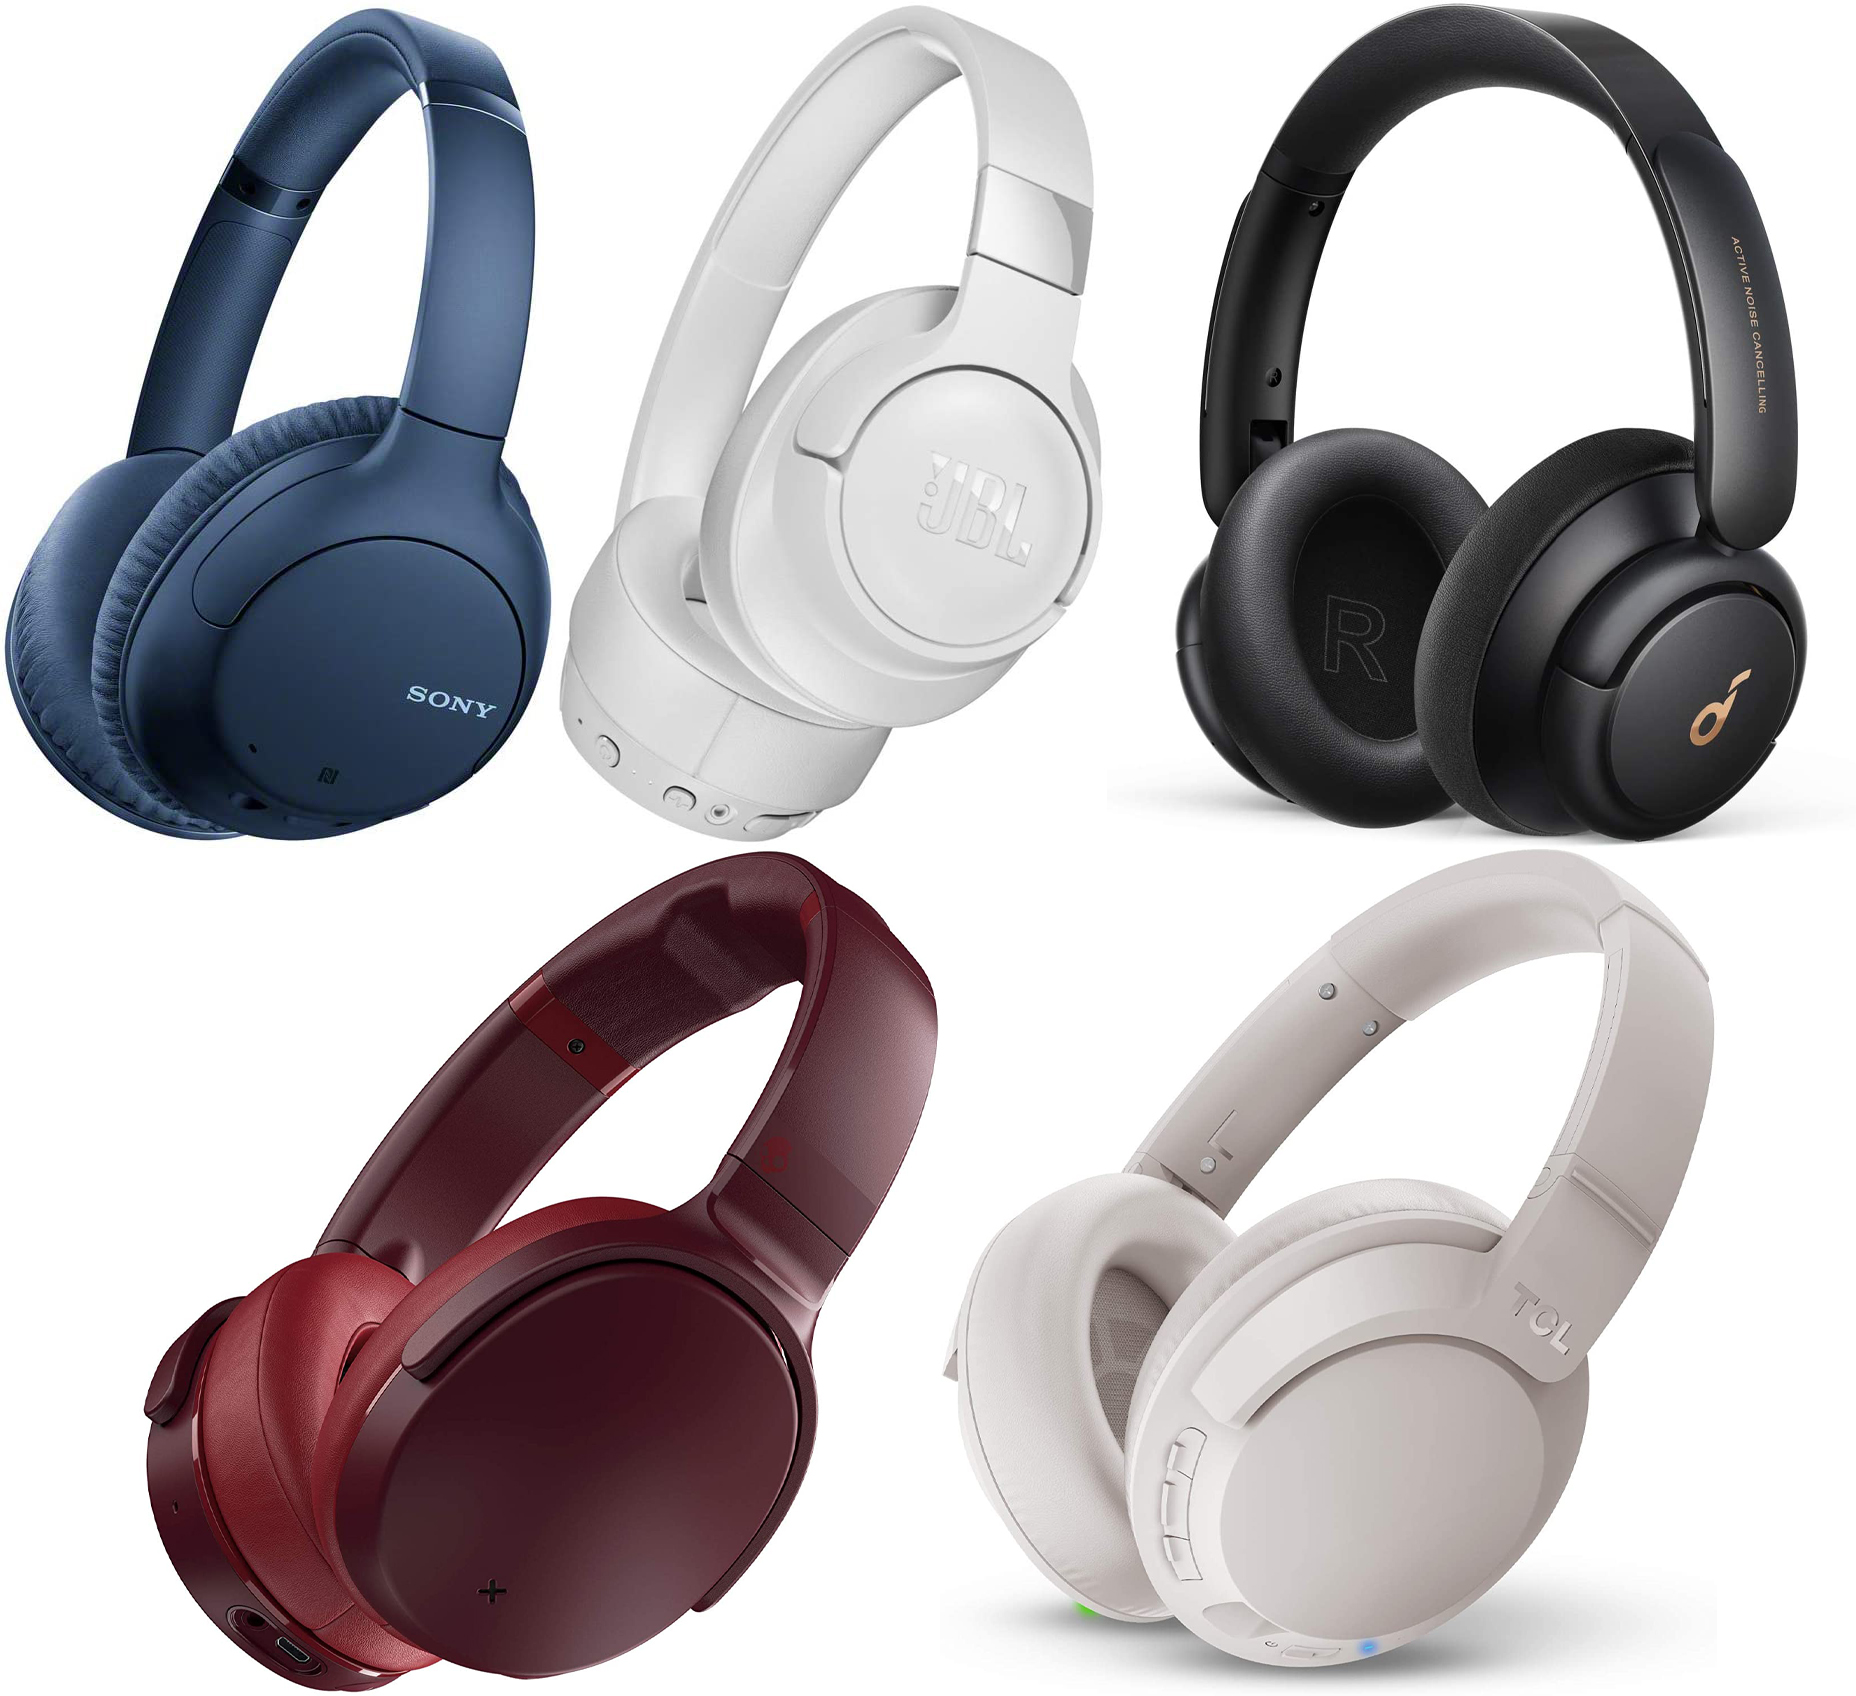 Top 5 wireless noise cancelling headphones under $100 – 2020